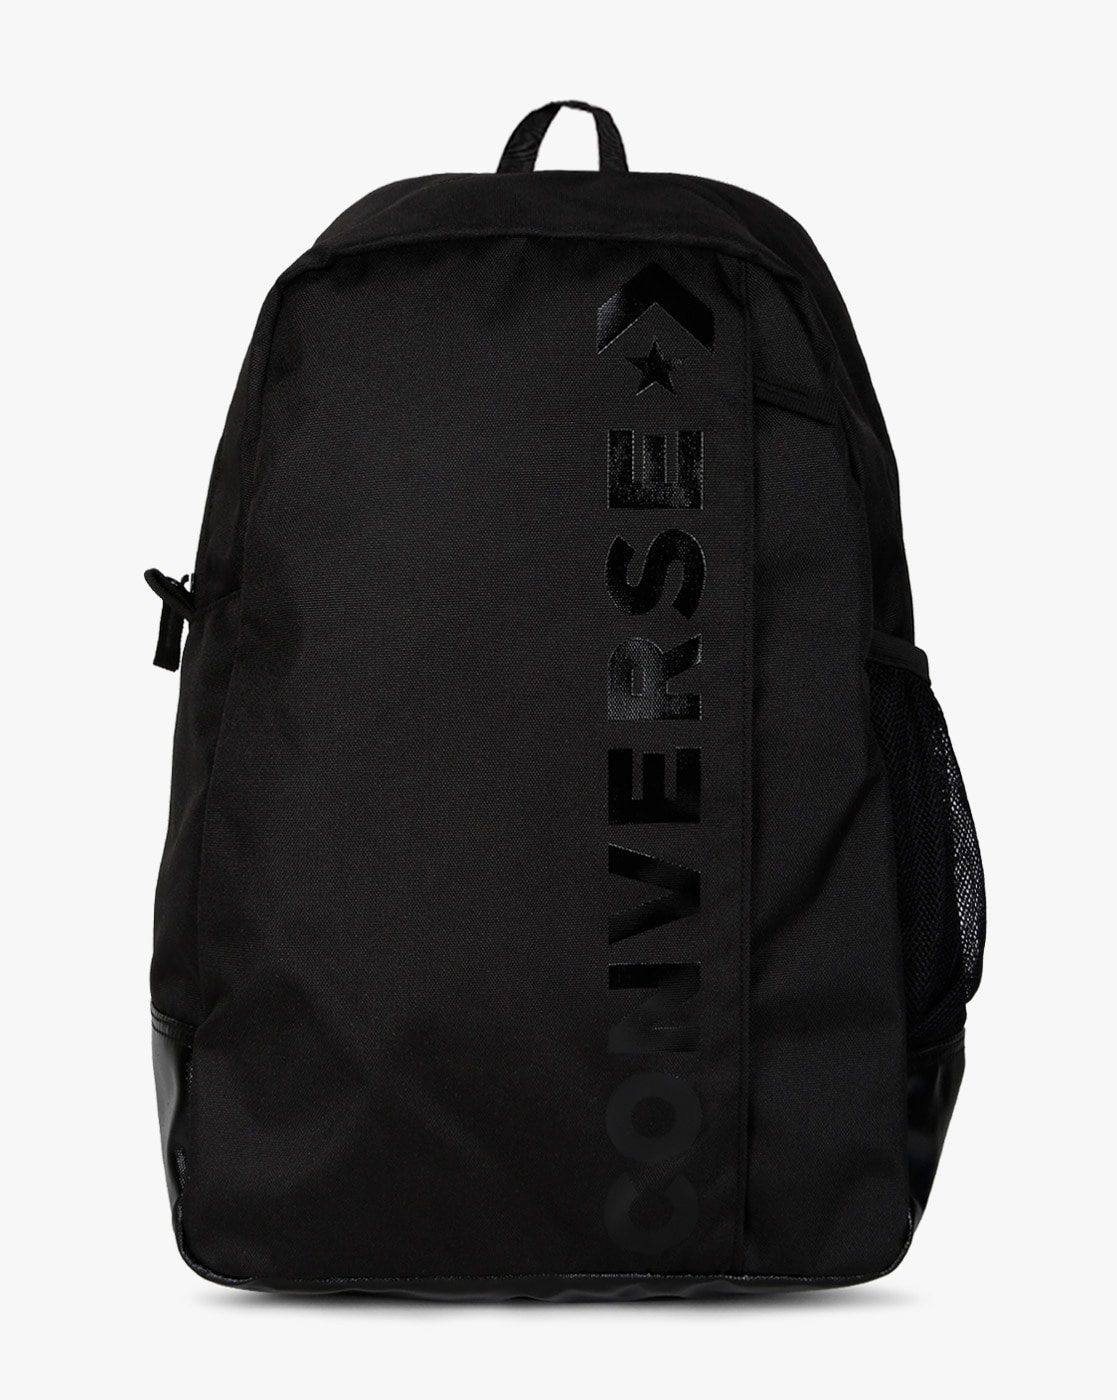 Buy Black Backpacks for Men by CONVERSE Online 